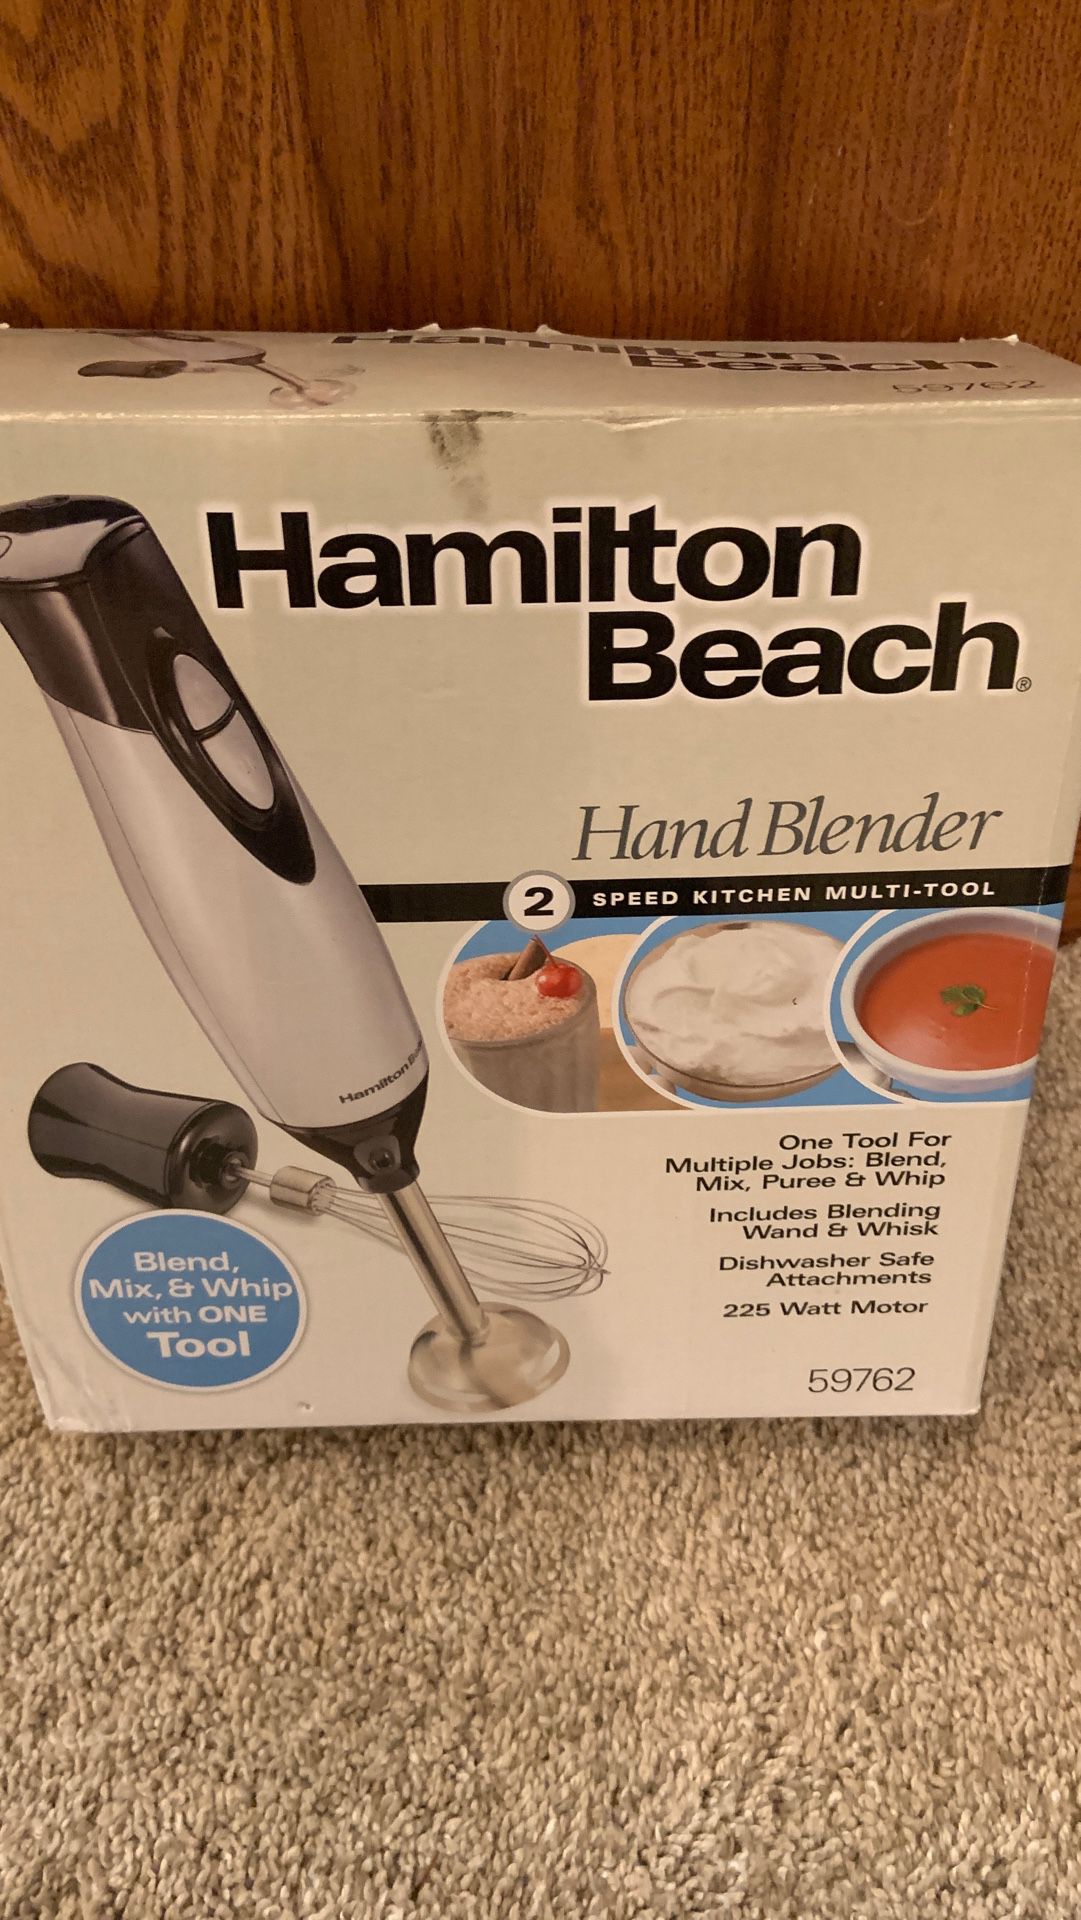 Hamilton Beach Hans Blender NEW